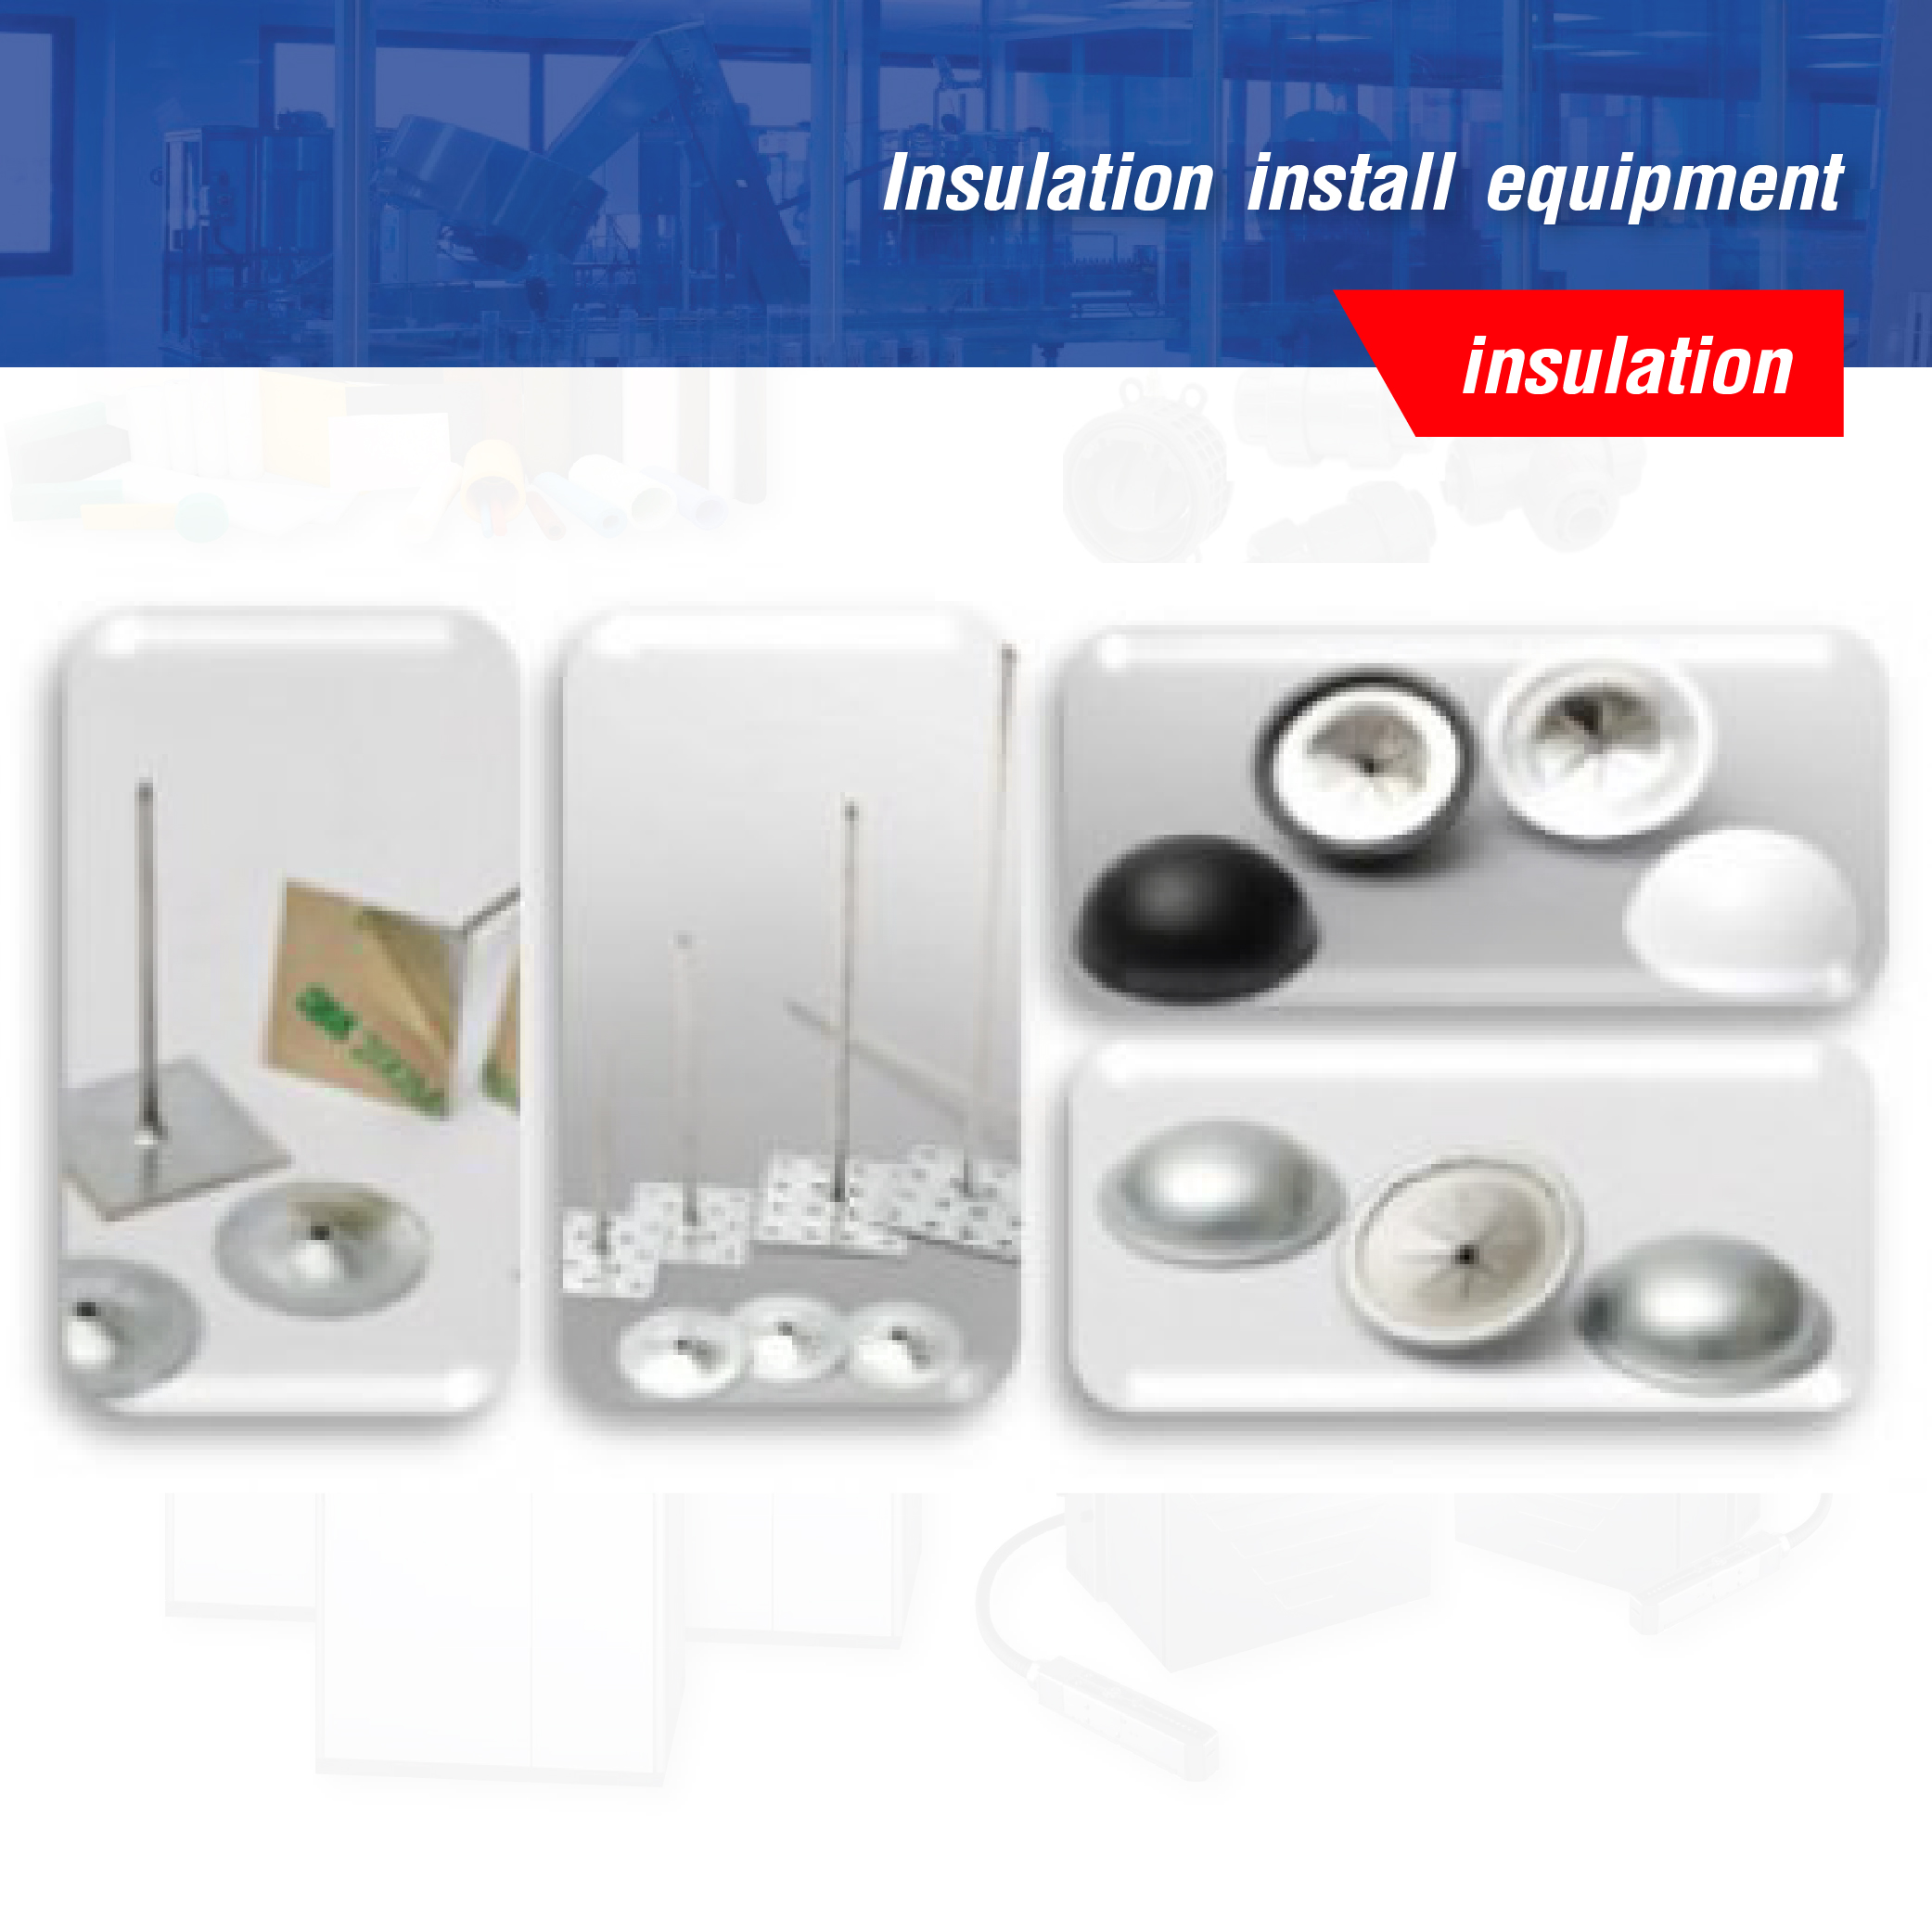 Insulation install equipment